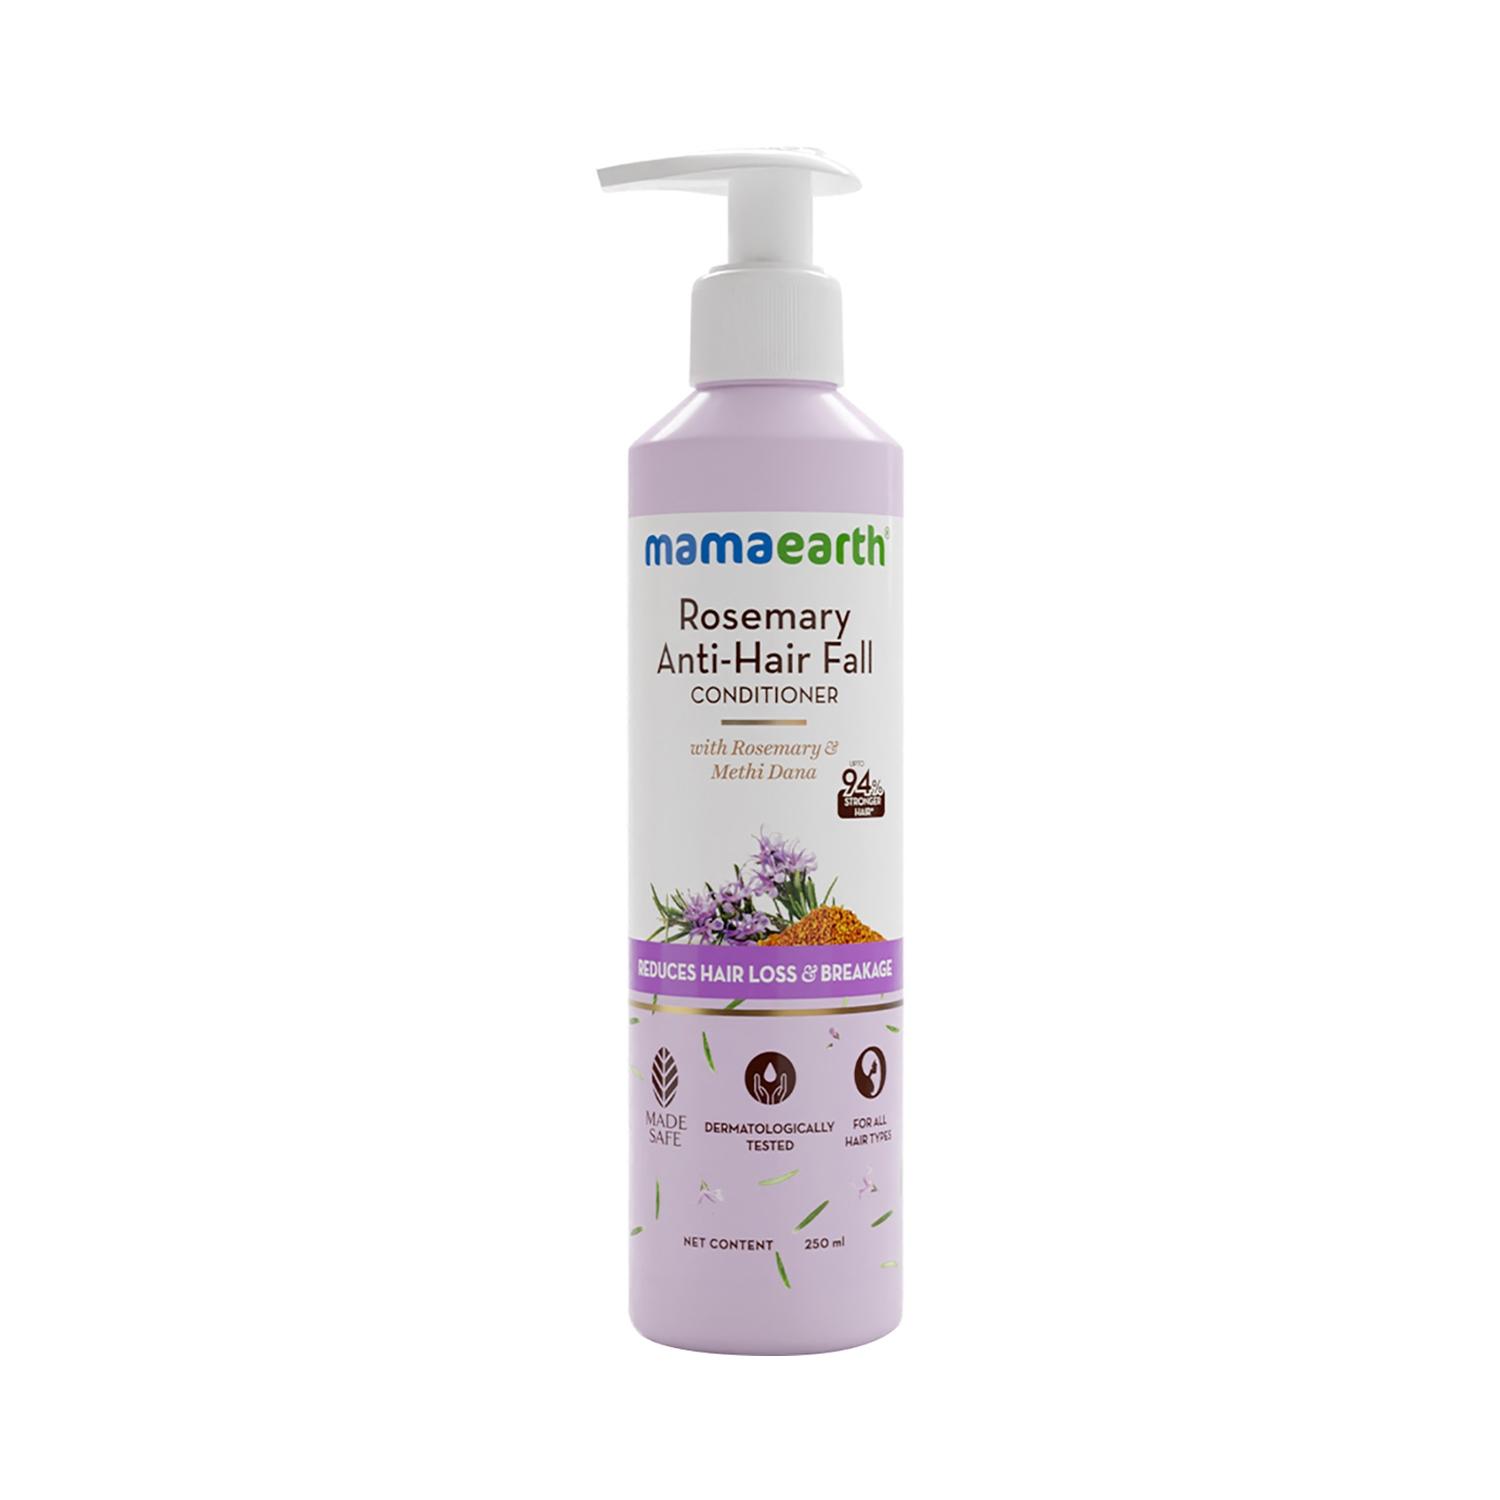 mamaearth rosemary anti-hair fall conditioner with rosemary & methi dana (250ml)